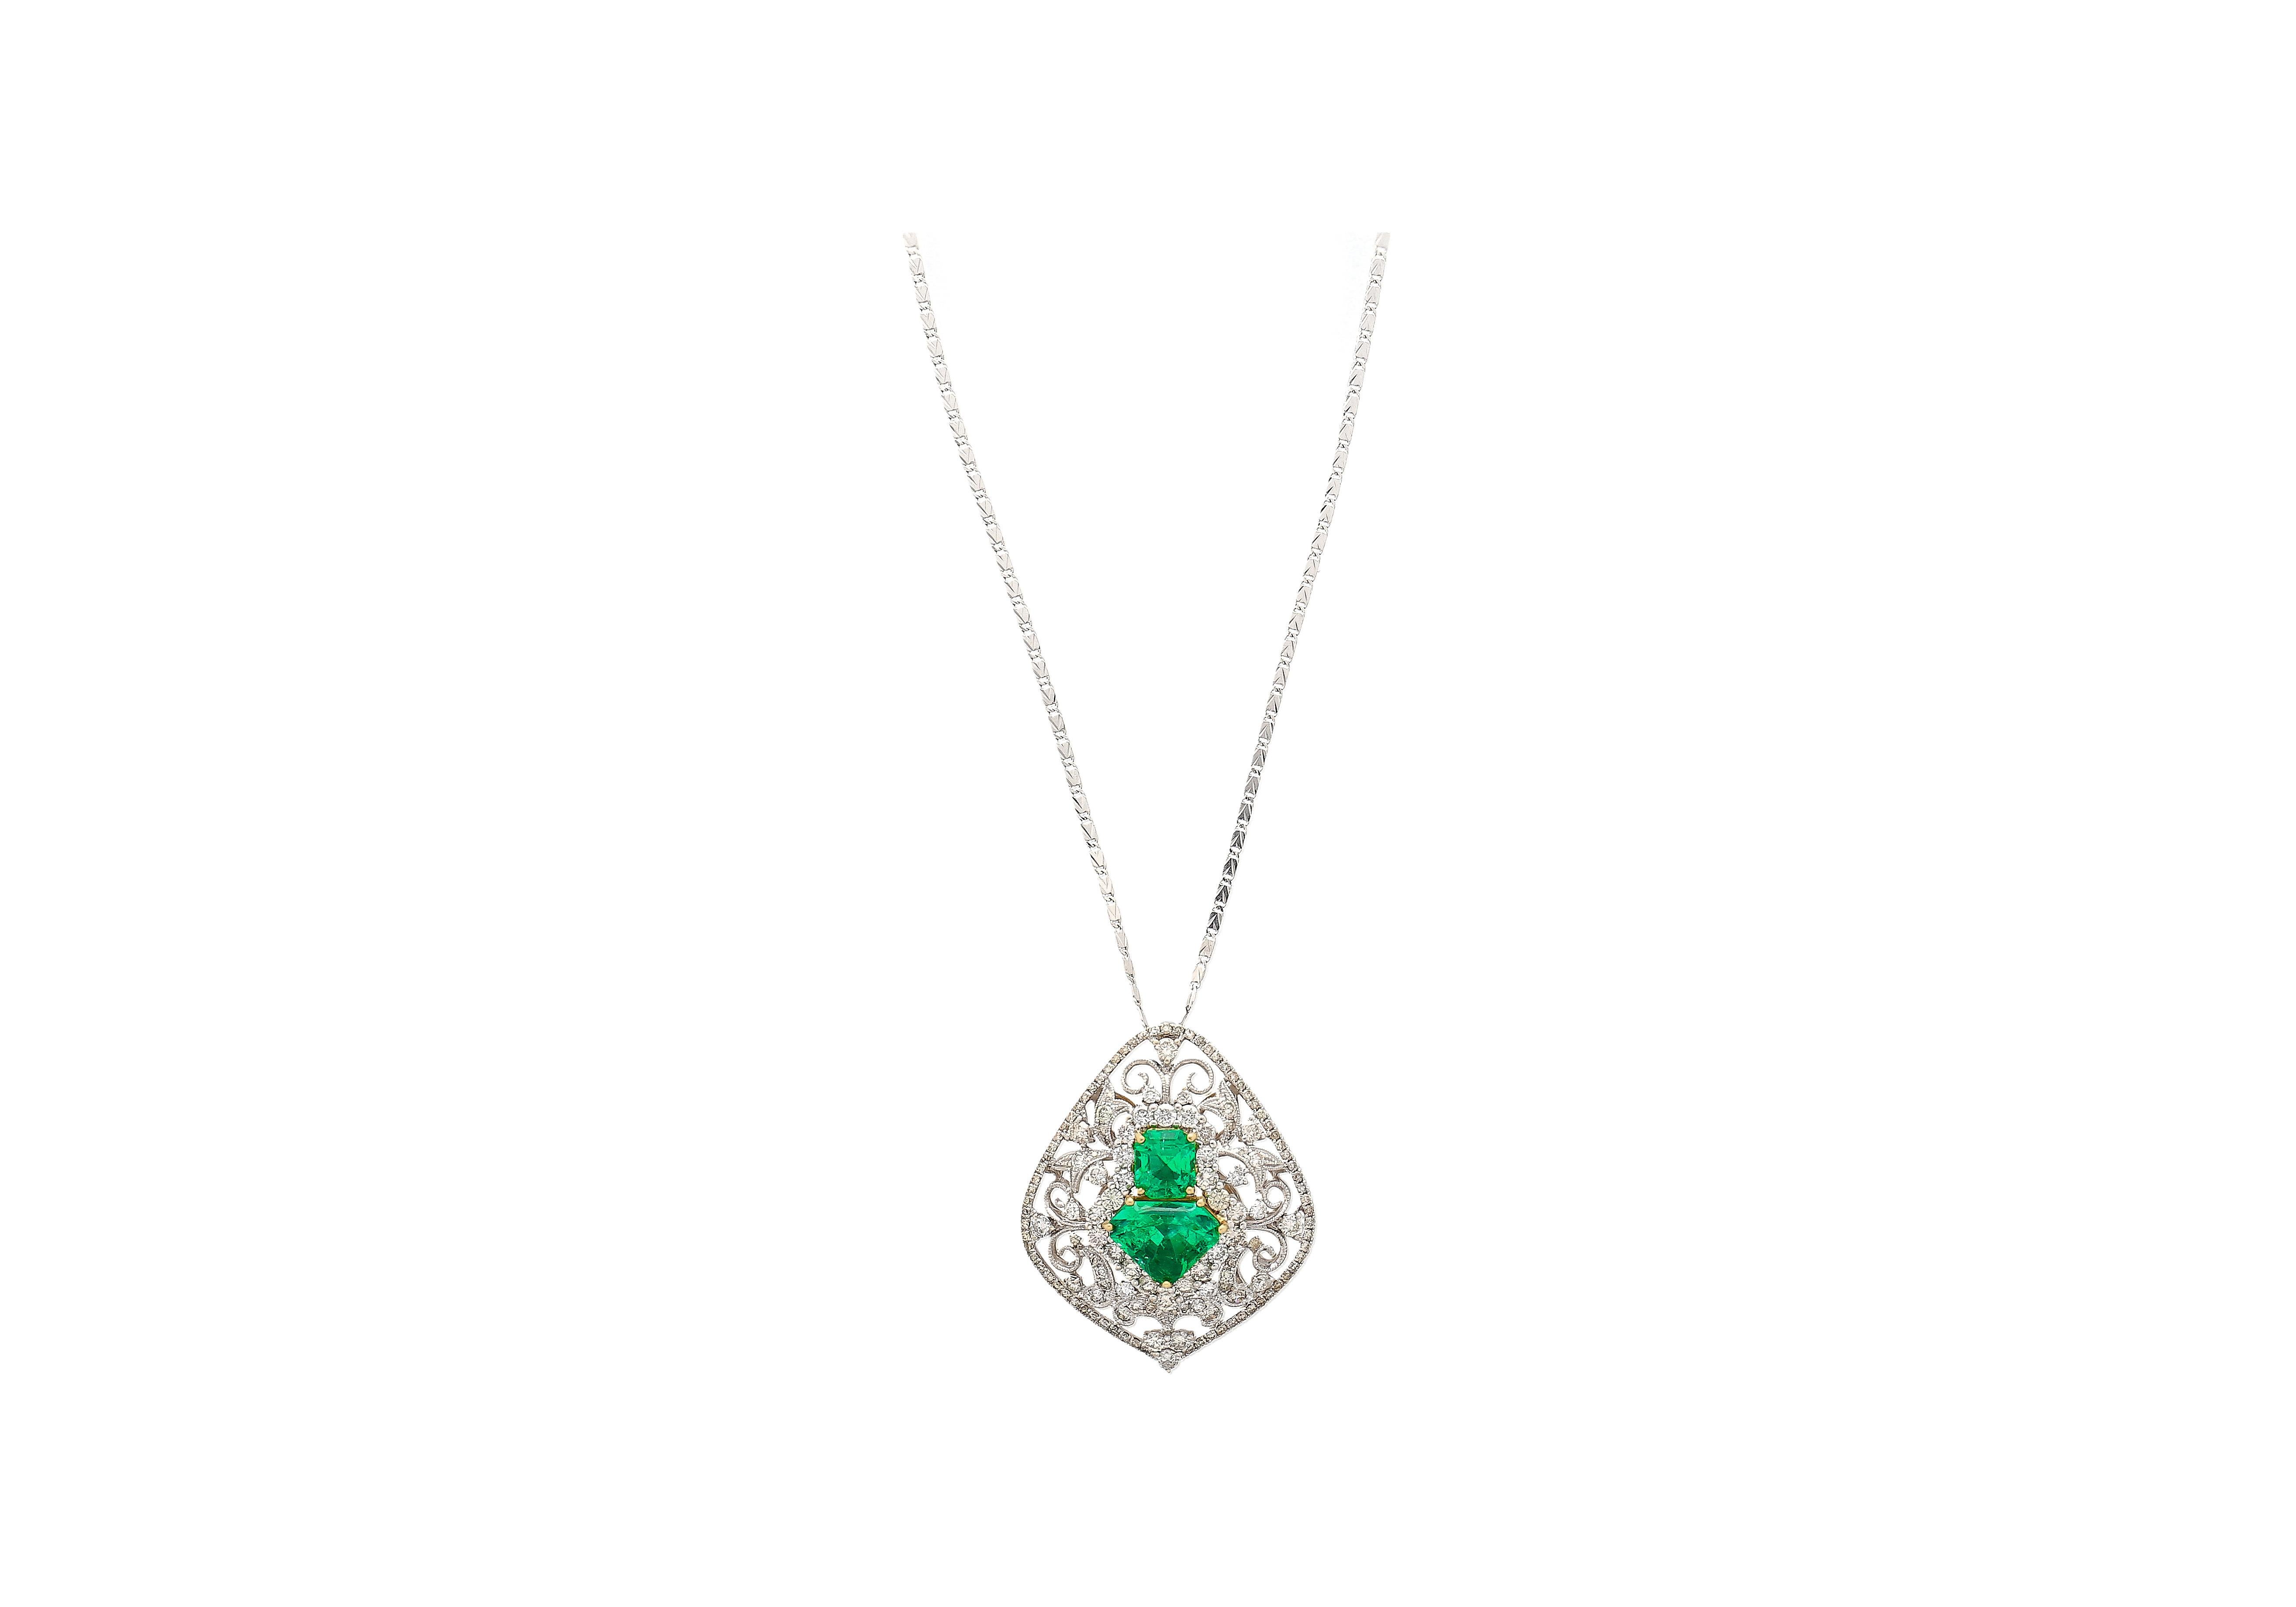 Art Nouveau Vintage Carved 18K White Gold Pendant Necklace With Shield Cut Emeralds For Sale